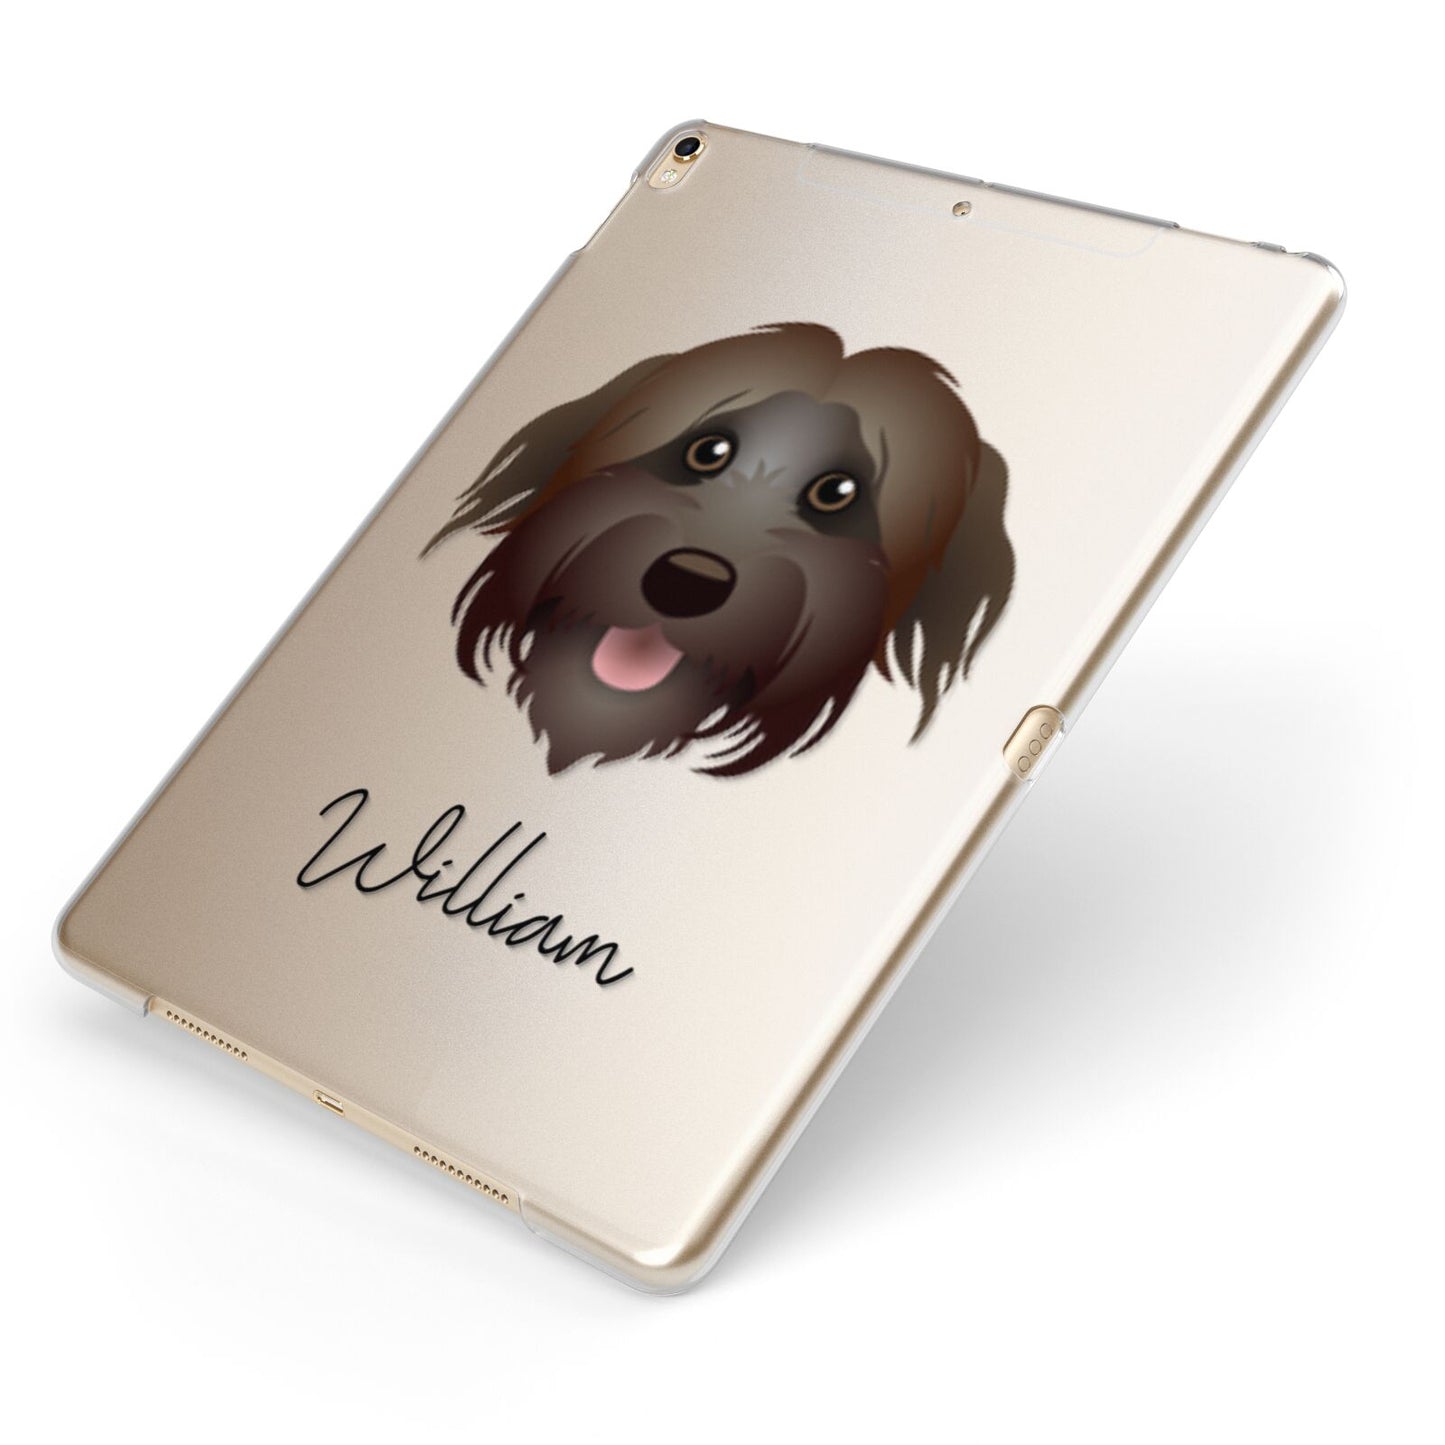 Pyrenean Shepherd Personalised Apple iPad Case on Gold iPad Side View